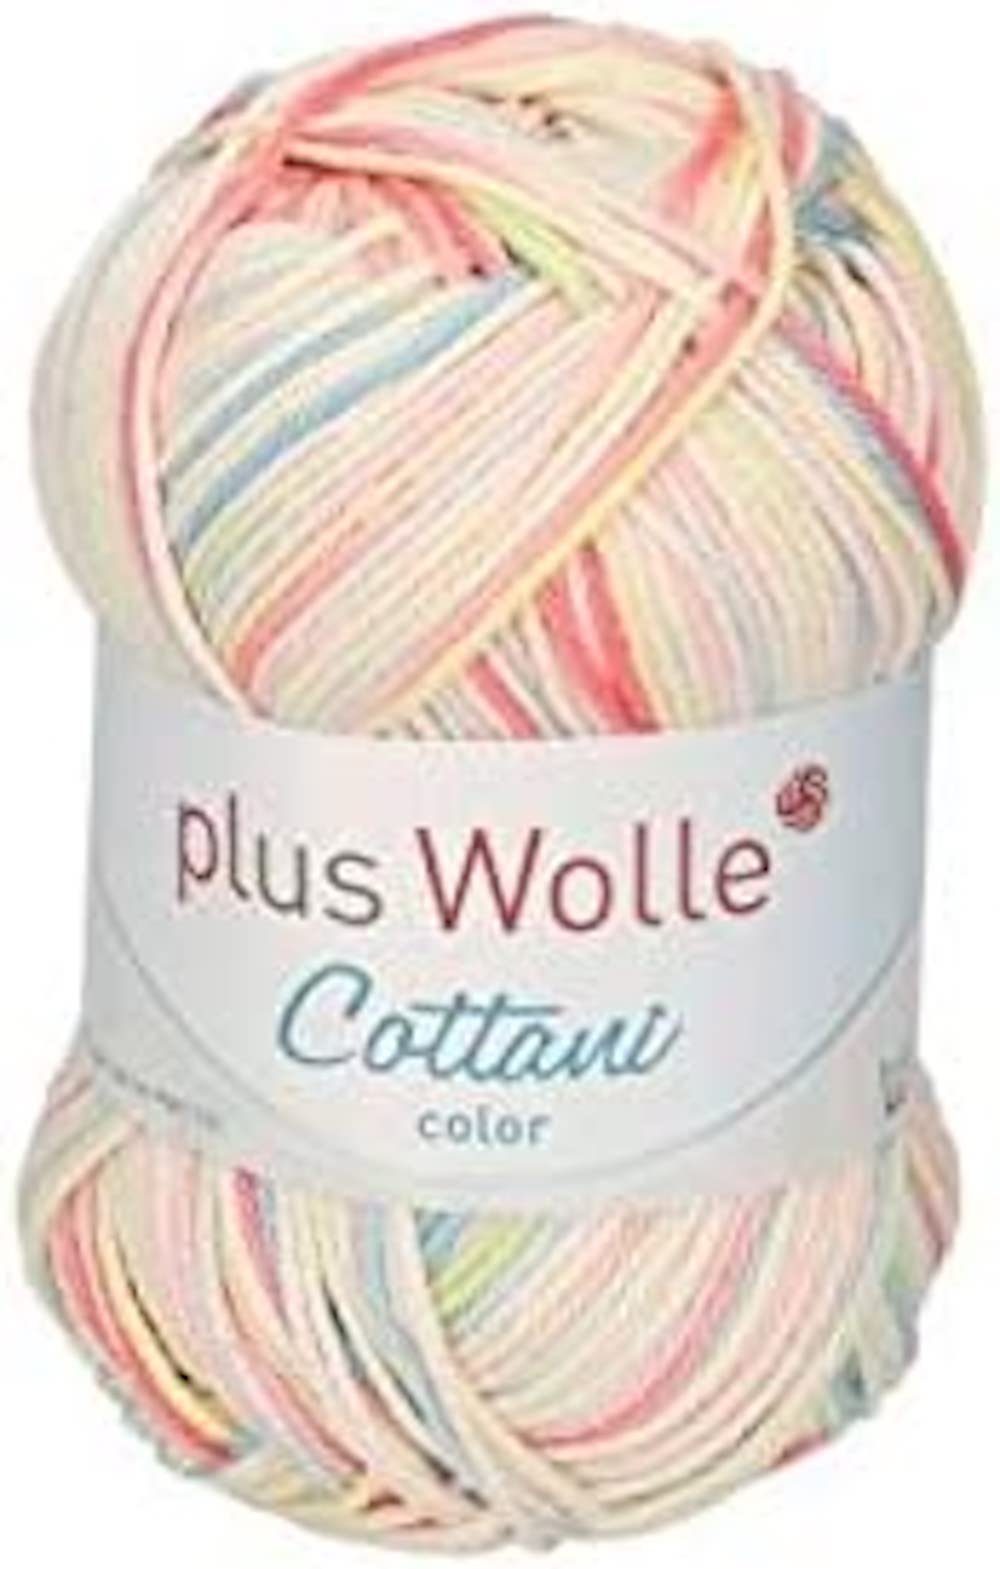 H-Erzmade Dekofigur Baumwolle Color, pastellfarben 50g/125m, Cottani Wolle Plus 100